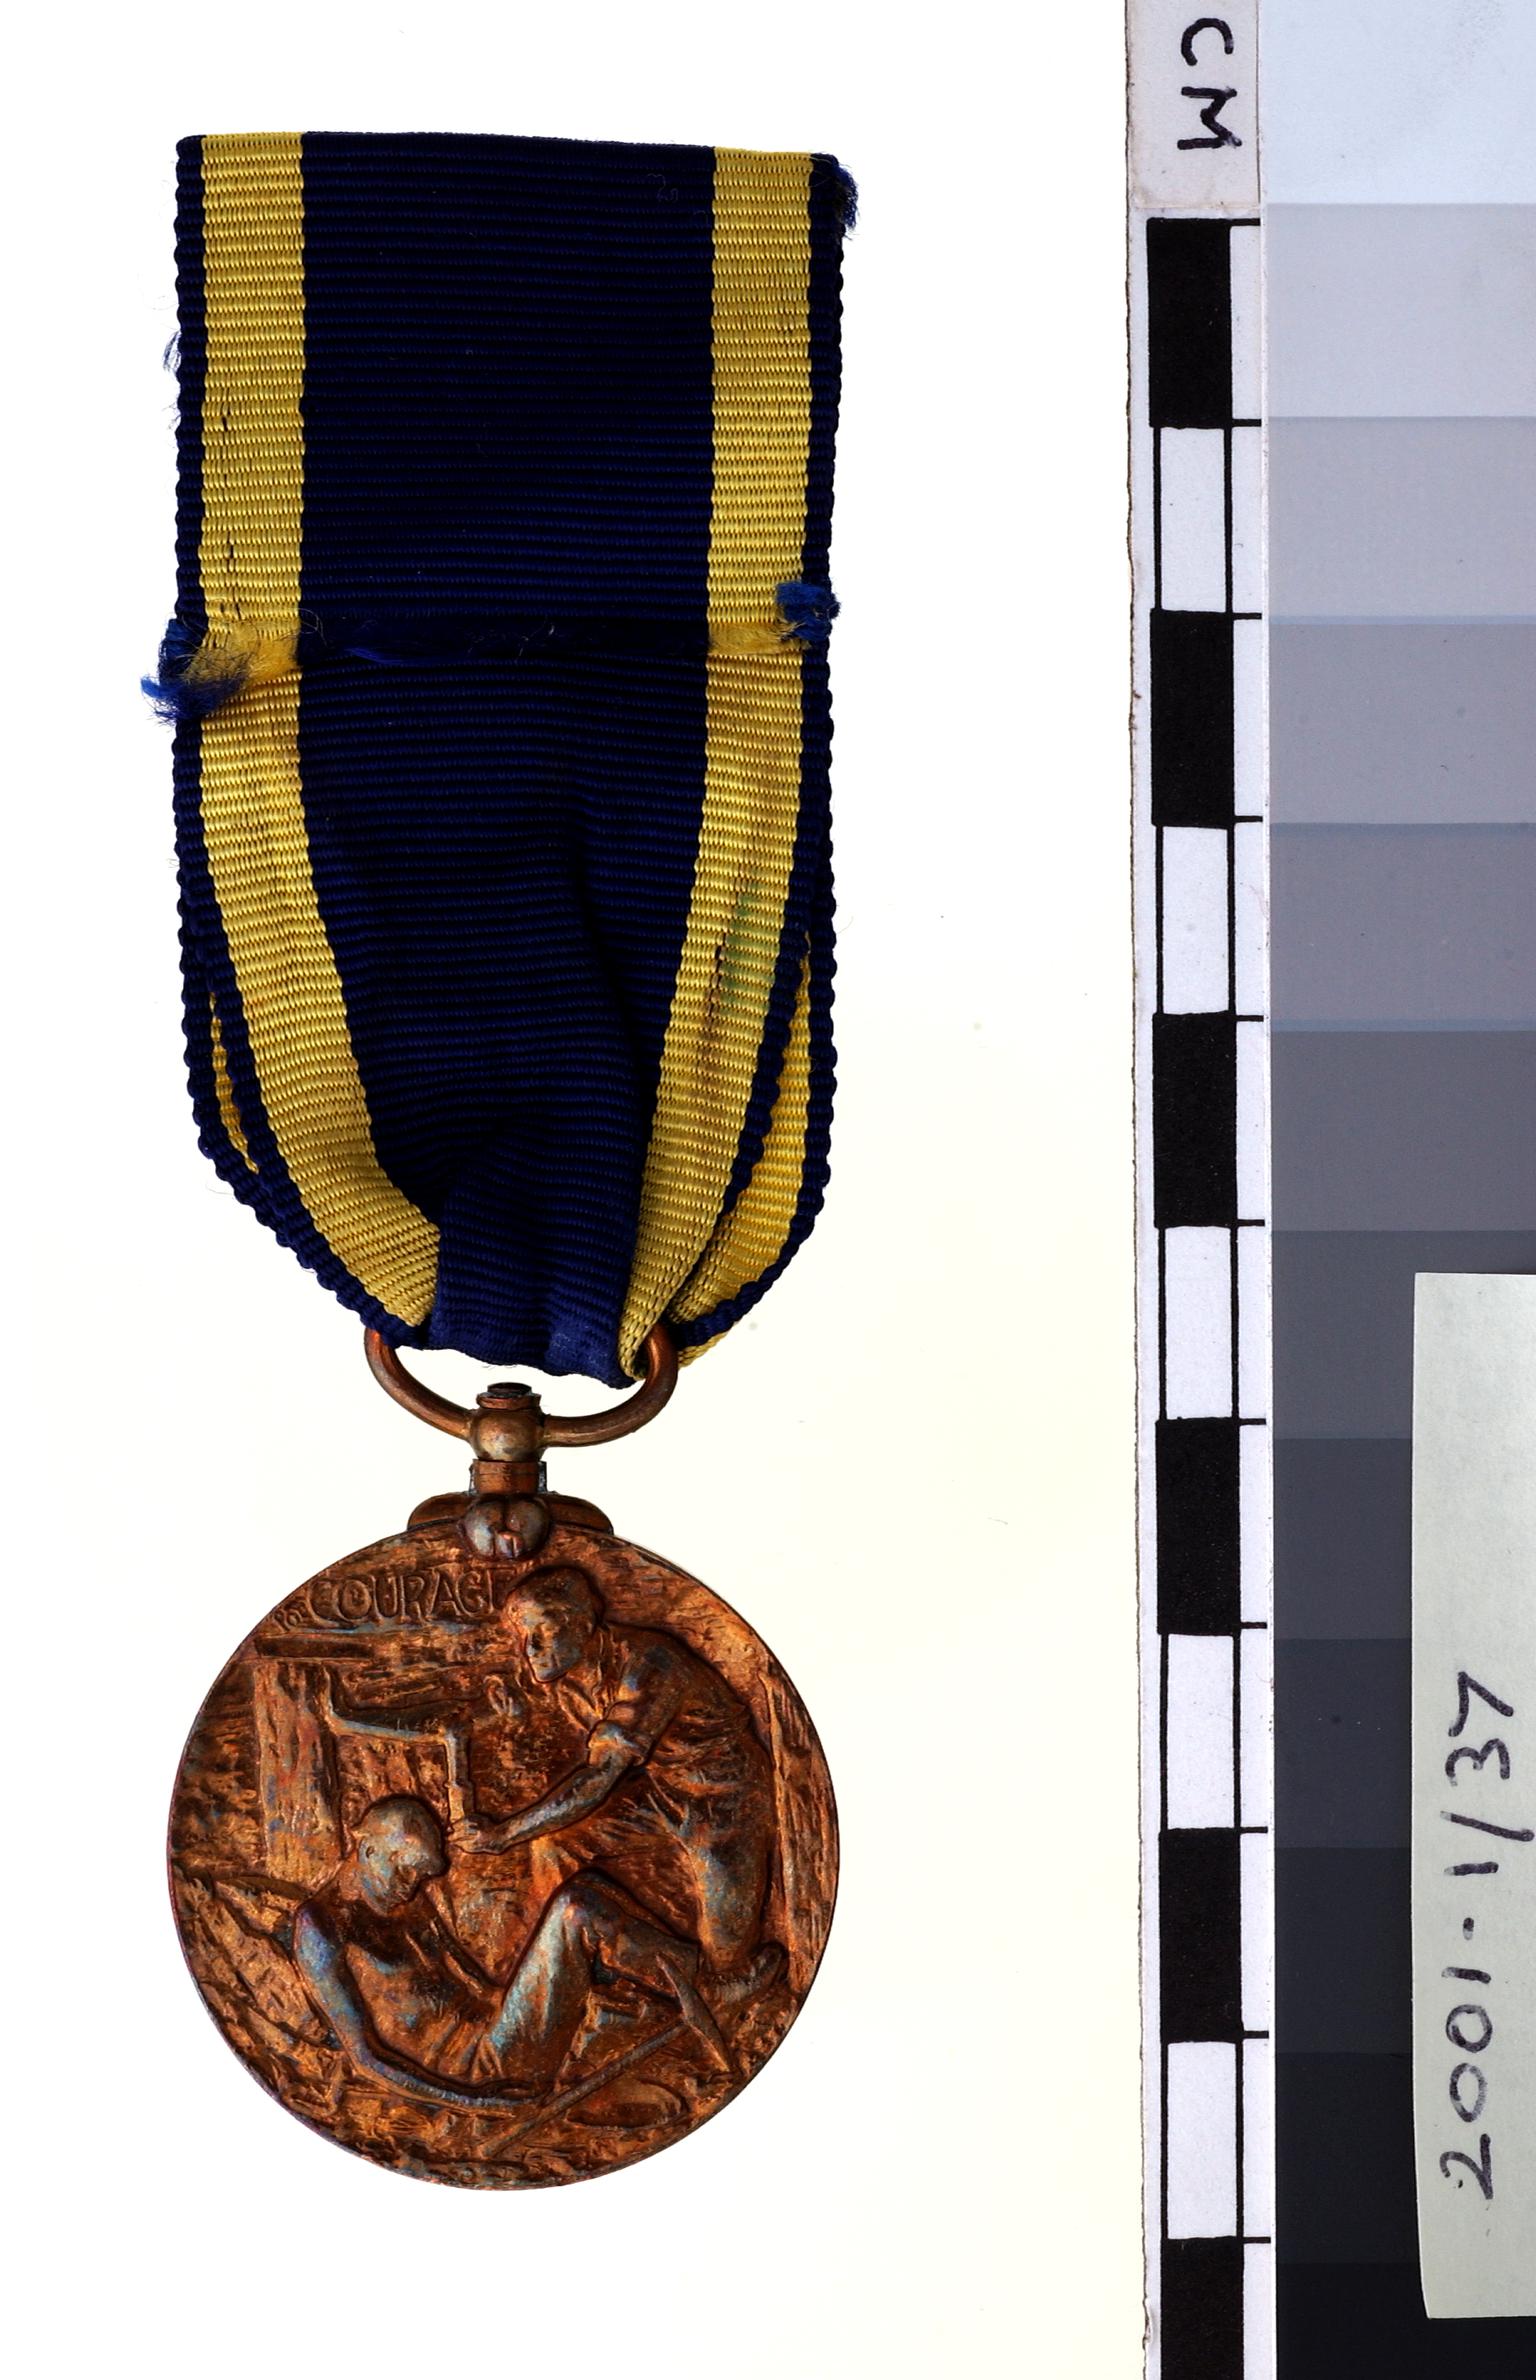 Edward Medal (Mines)